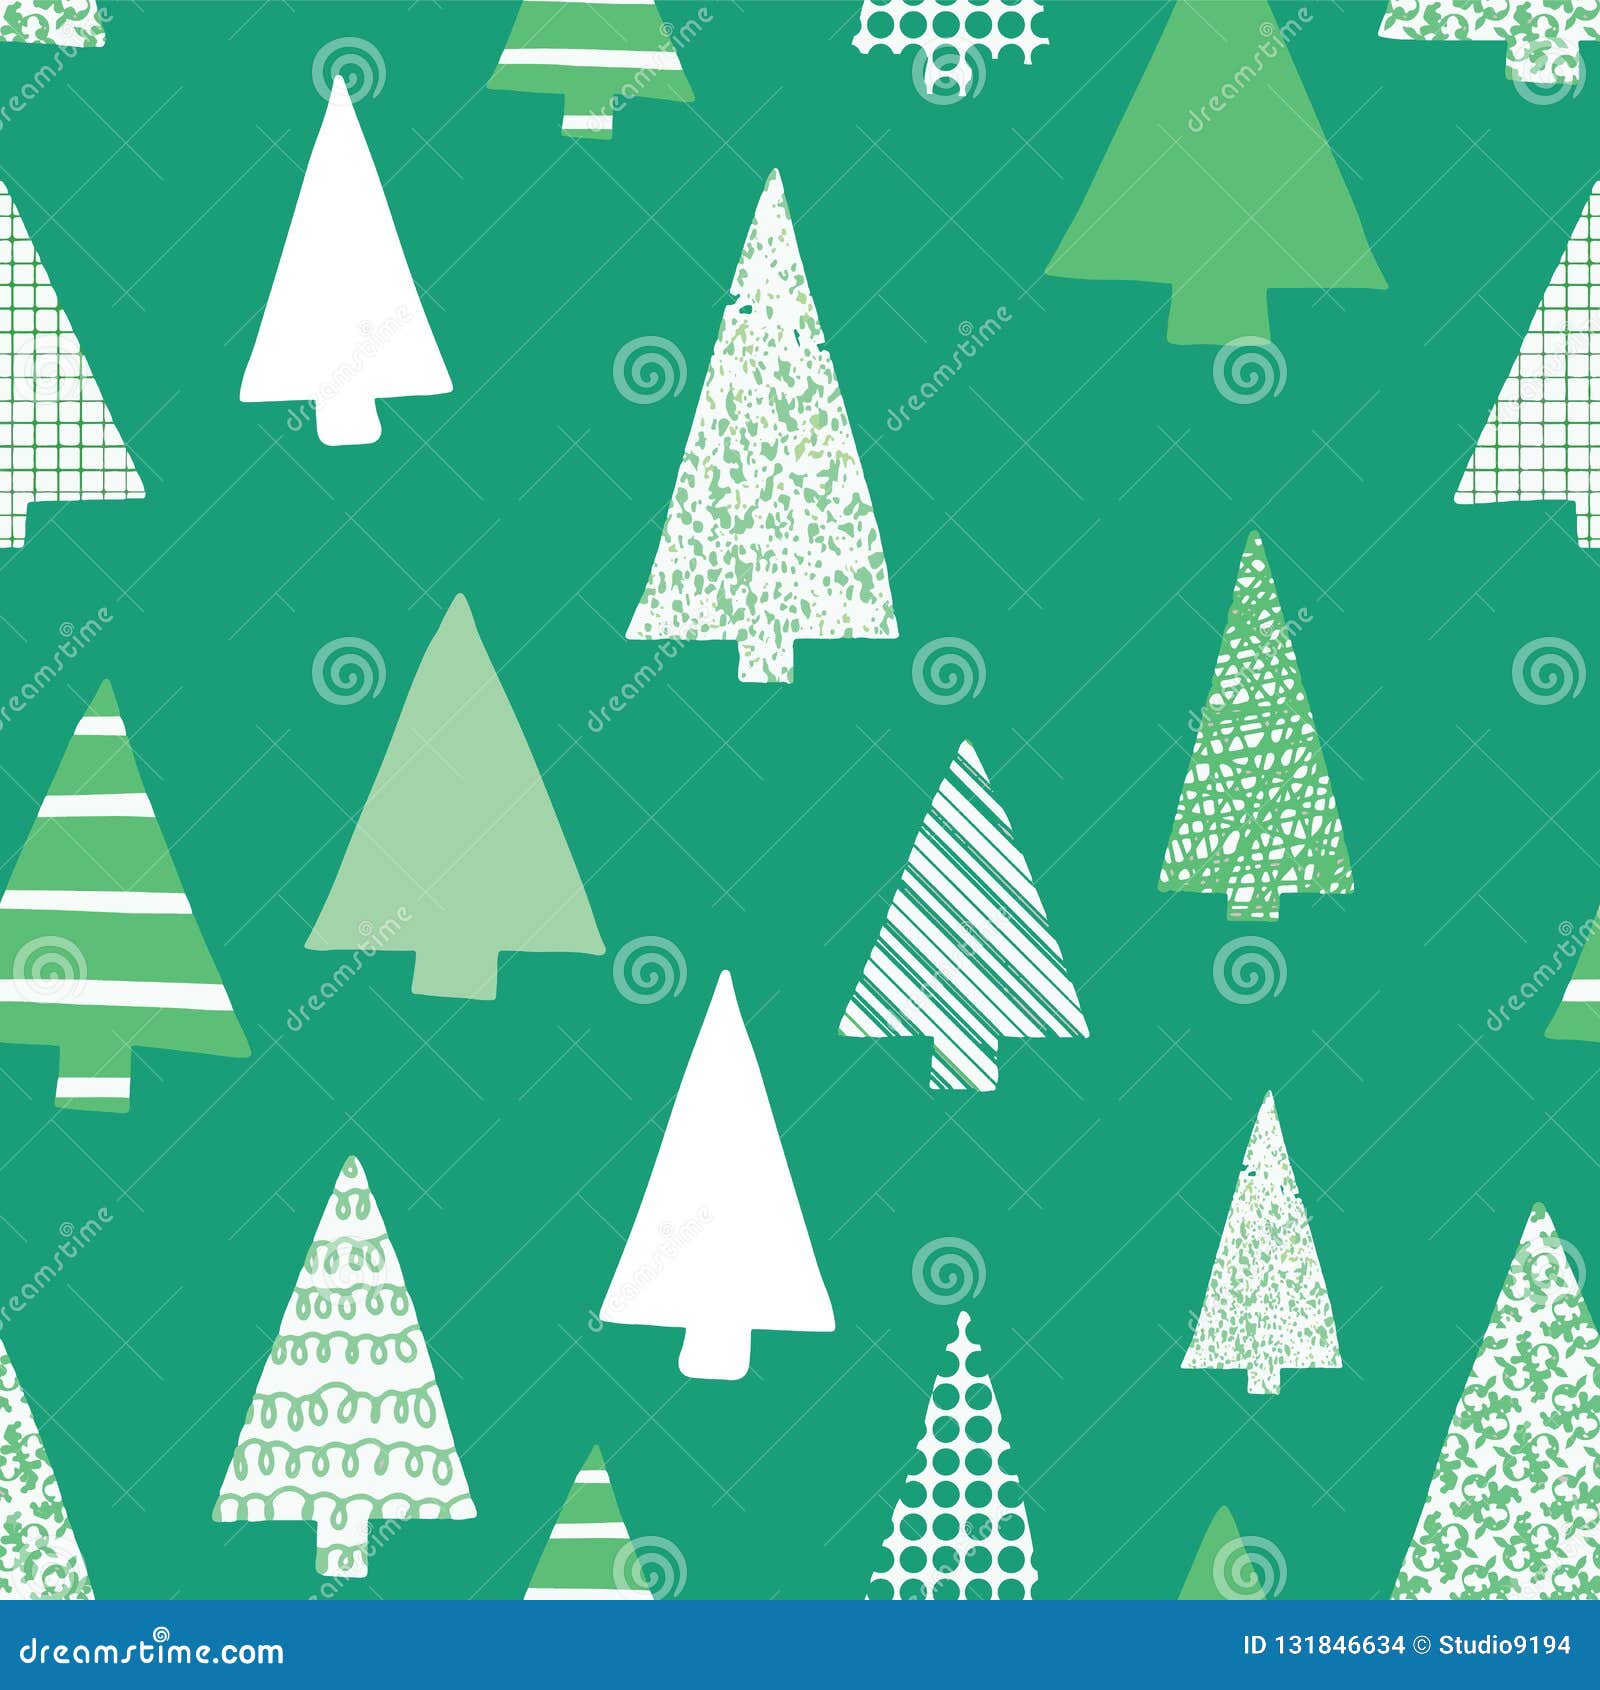 Abstract Christmas Trees Vector Seamless Pattern. Christmas Tree ...